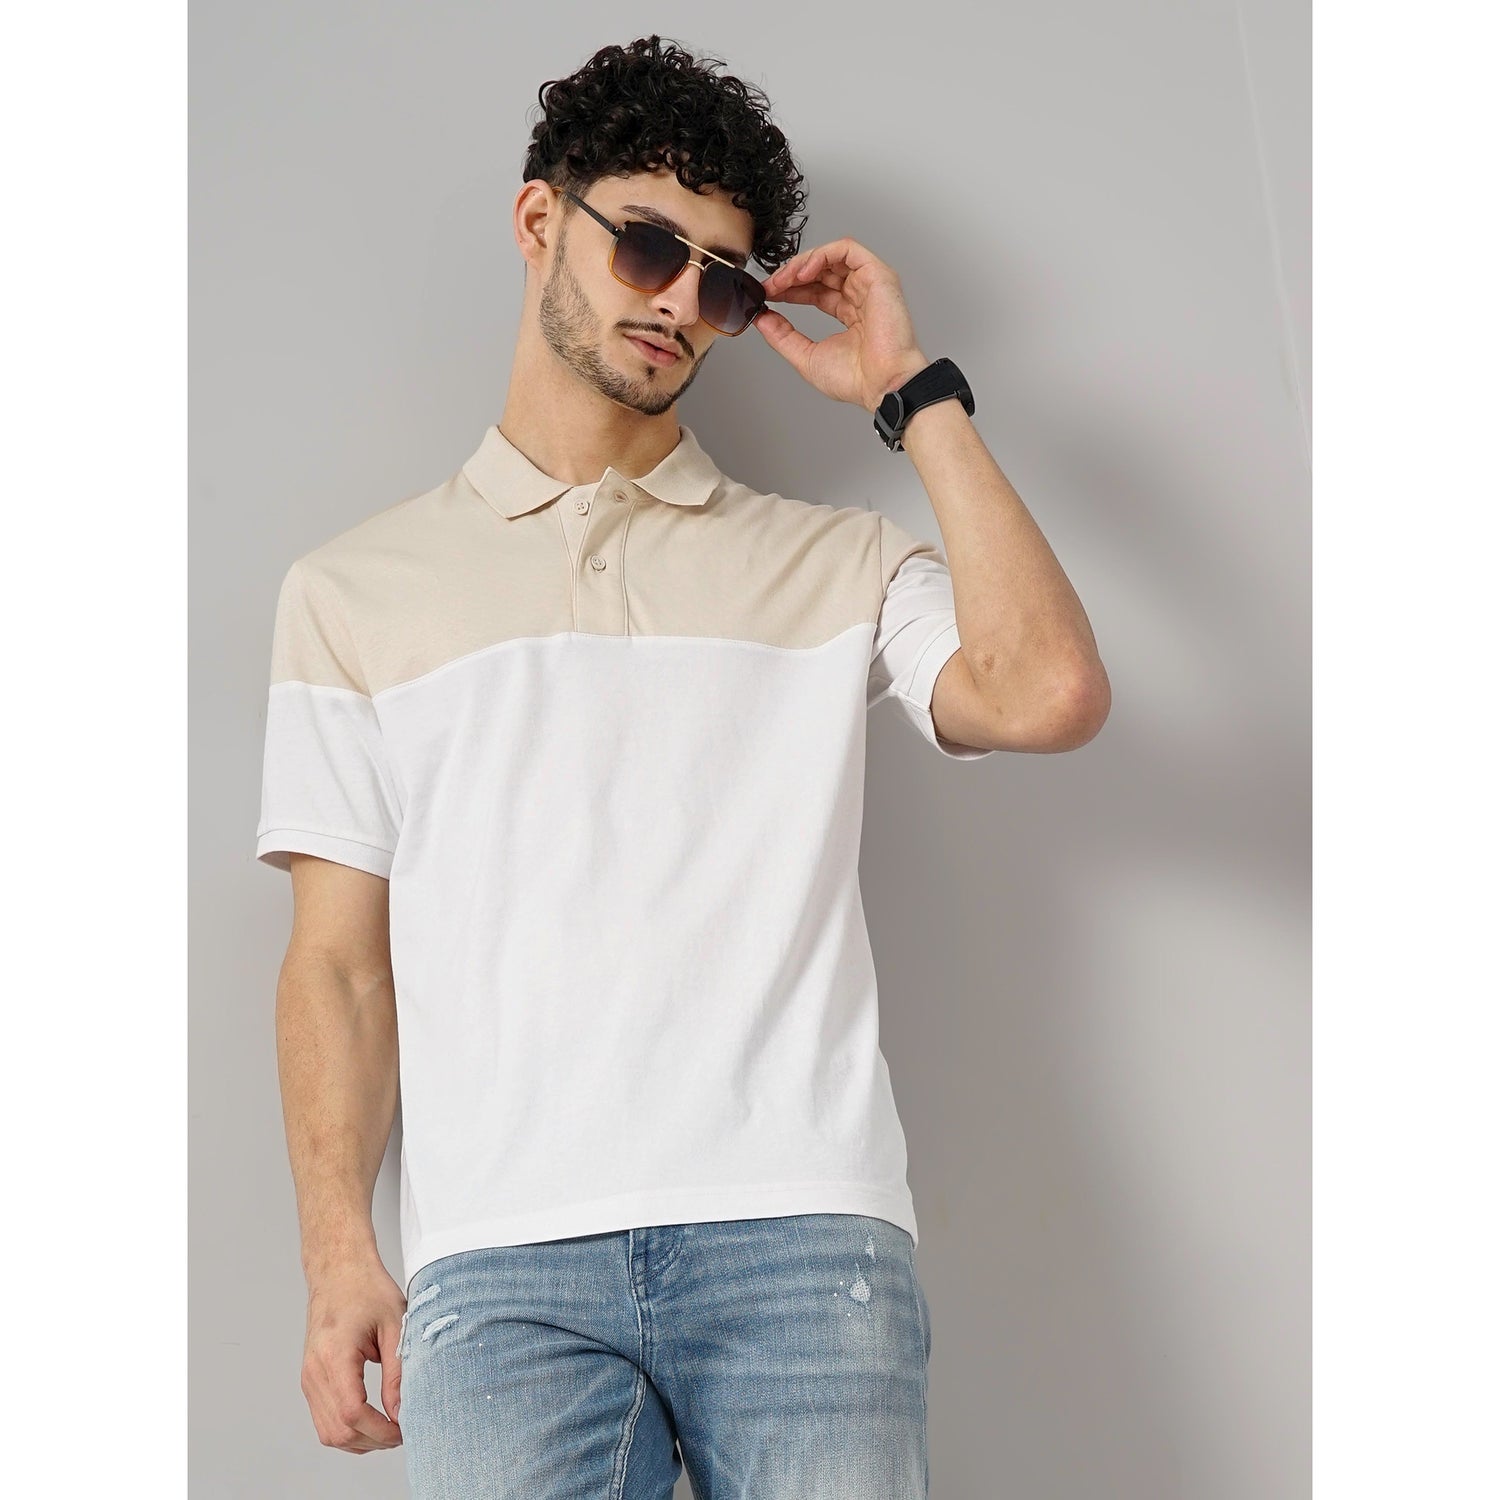 Men Off White Colourblocked Regular Fit Cotton Fashion Polo Tshirt (GEINTE)